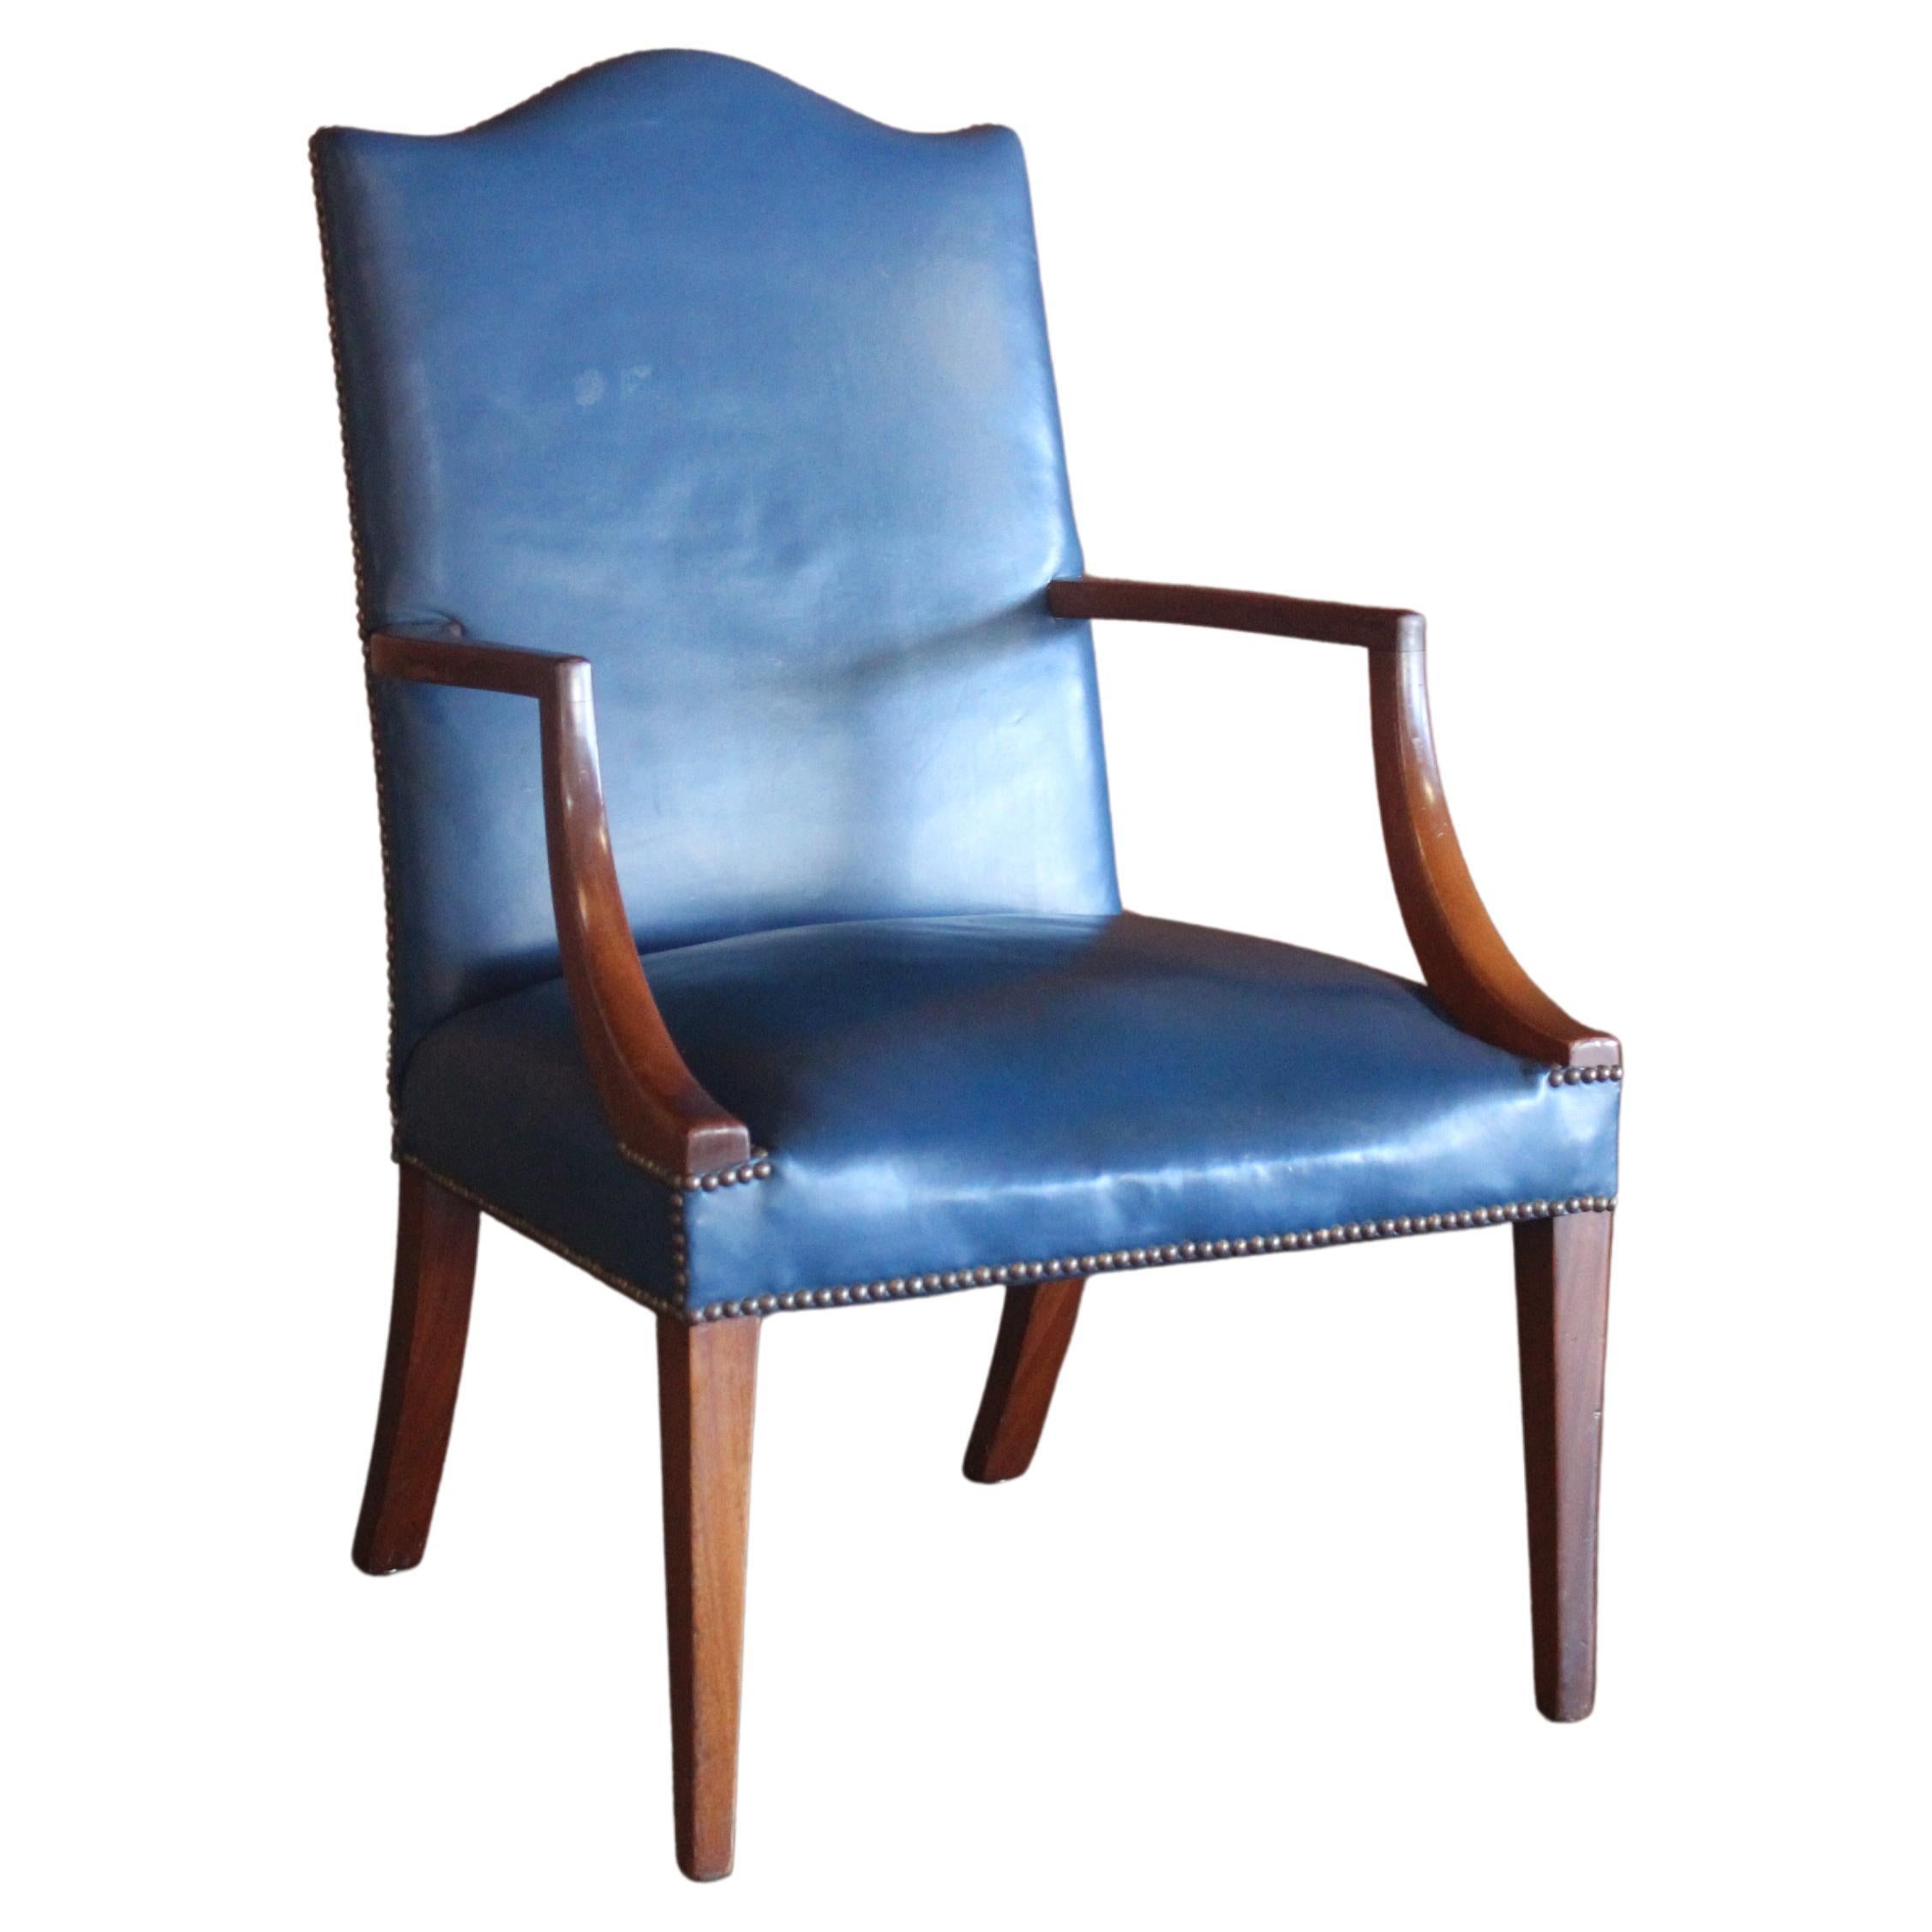 George II Stye English Mahogany Armchair in Original Blue Leather For Sale